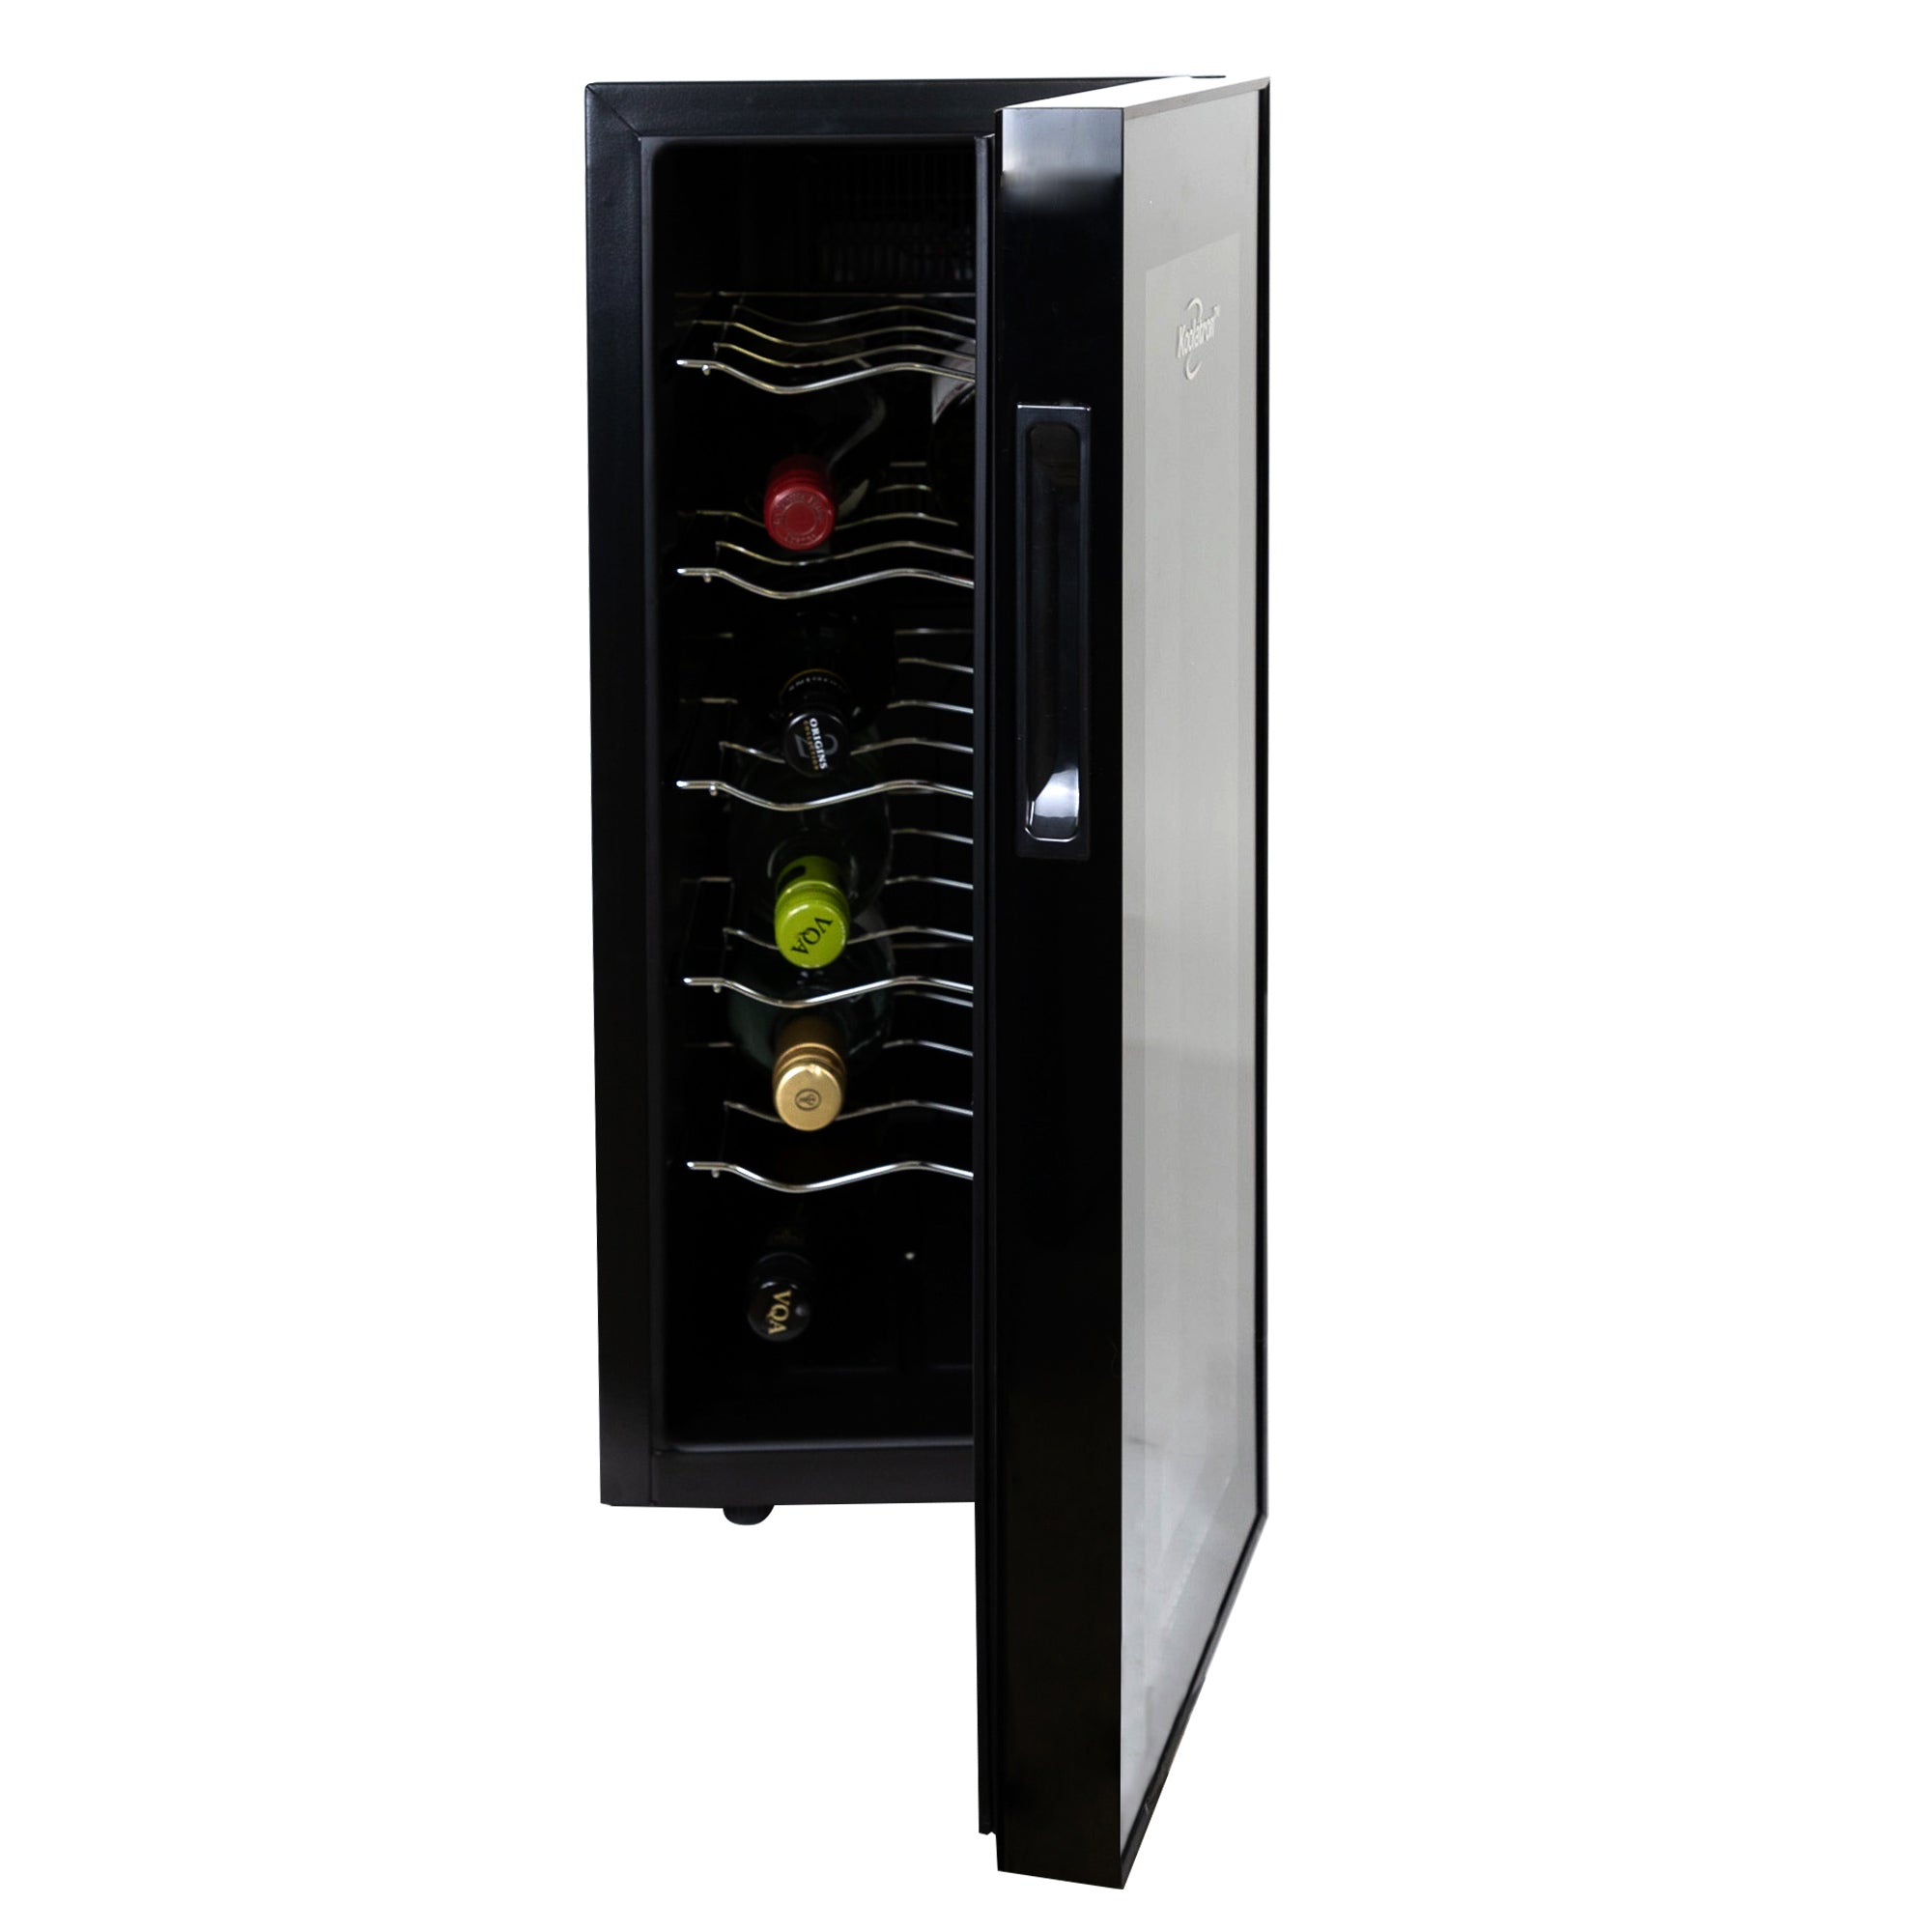 Koolatron BC88W 3.3 Cu. ft. Kool White Compact Refrigerator